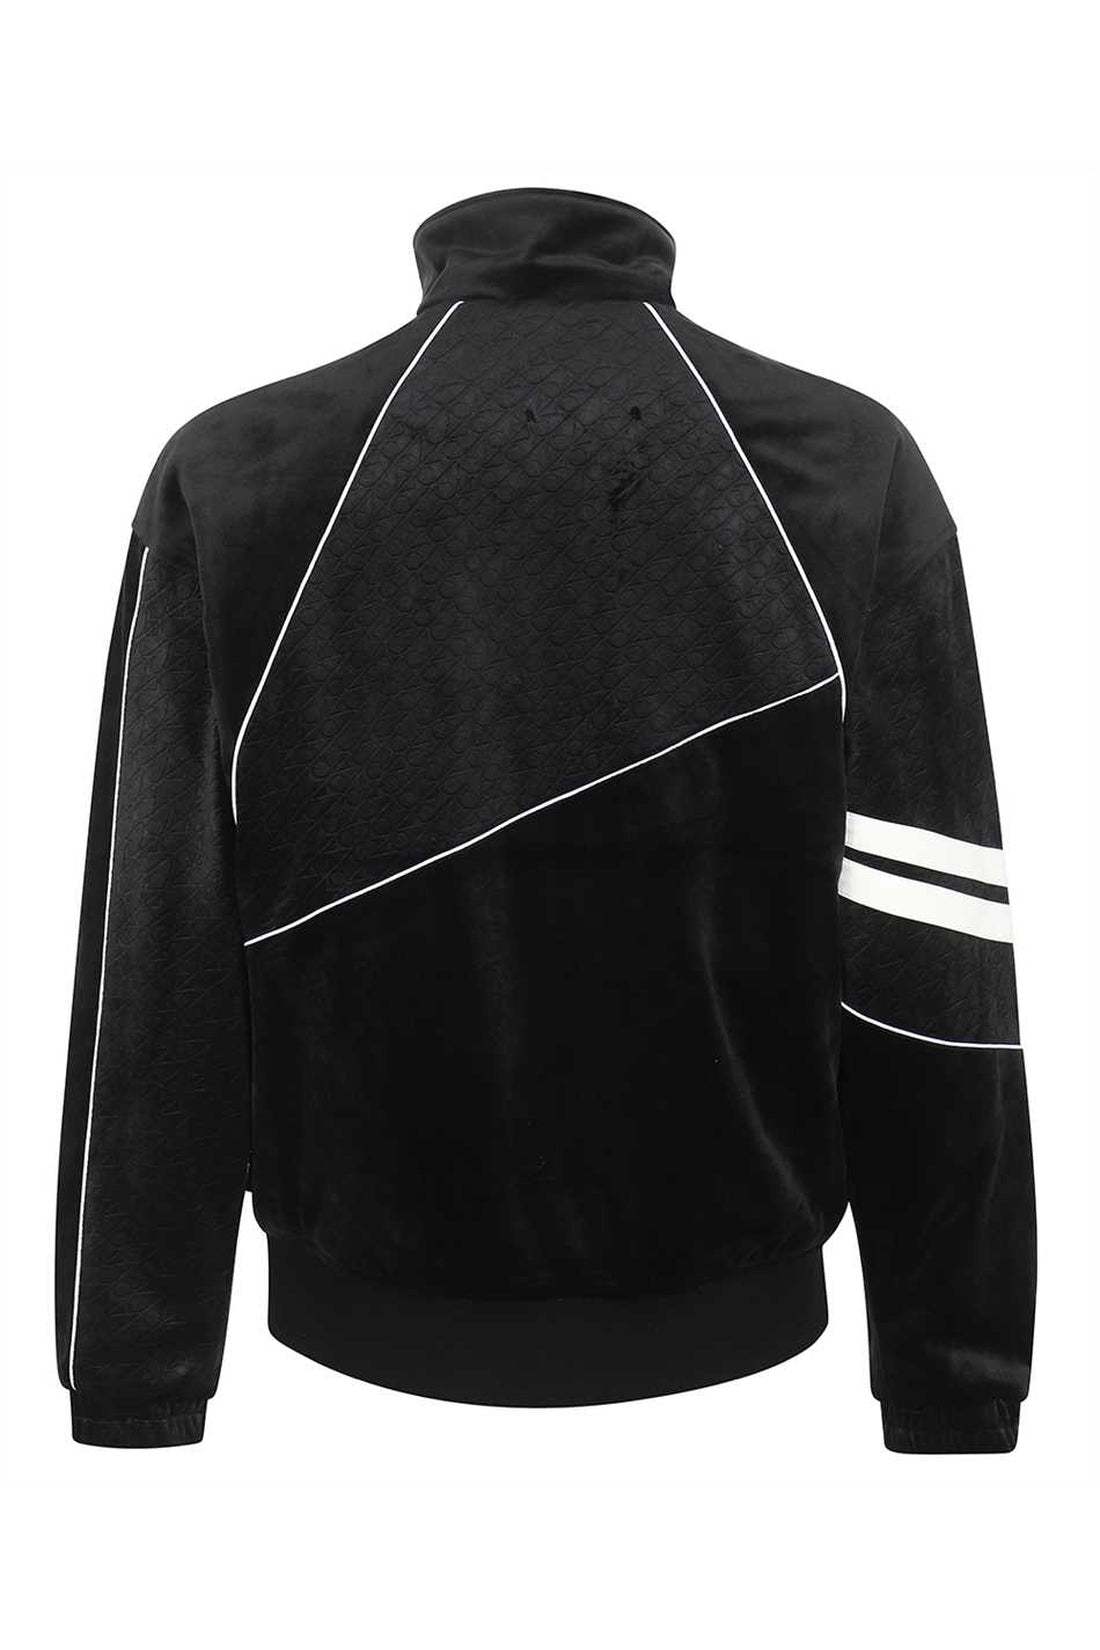 Moose Knuckles-OUTLET-SALE-Techno fabric full-zip sweatshirt-ARCHIVIST